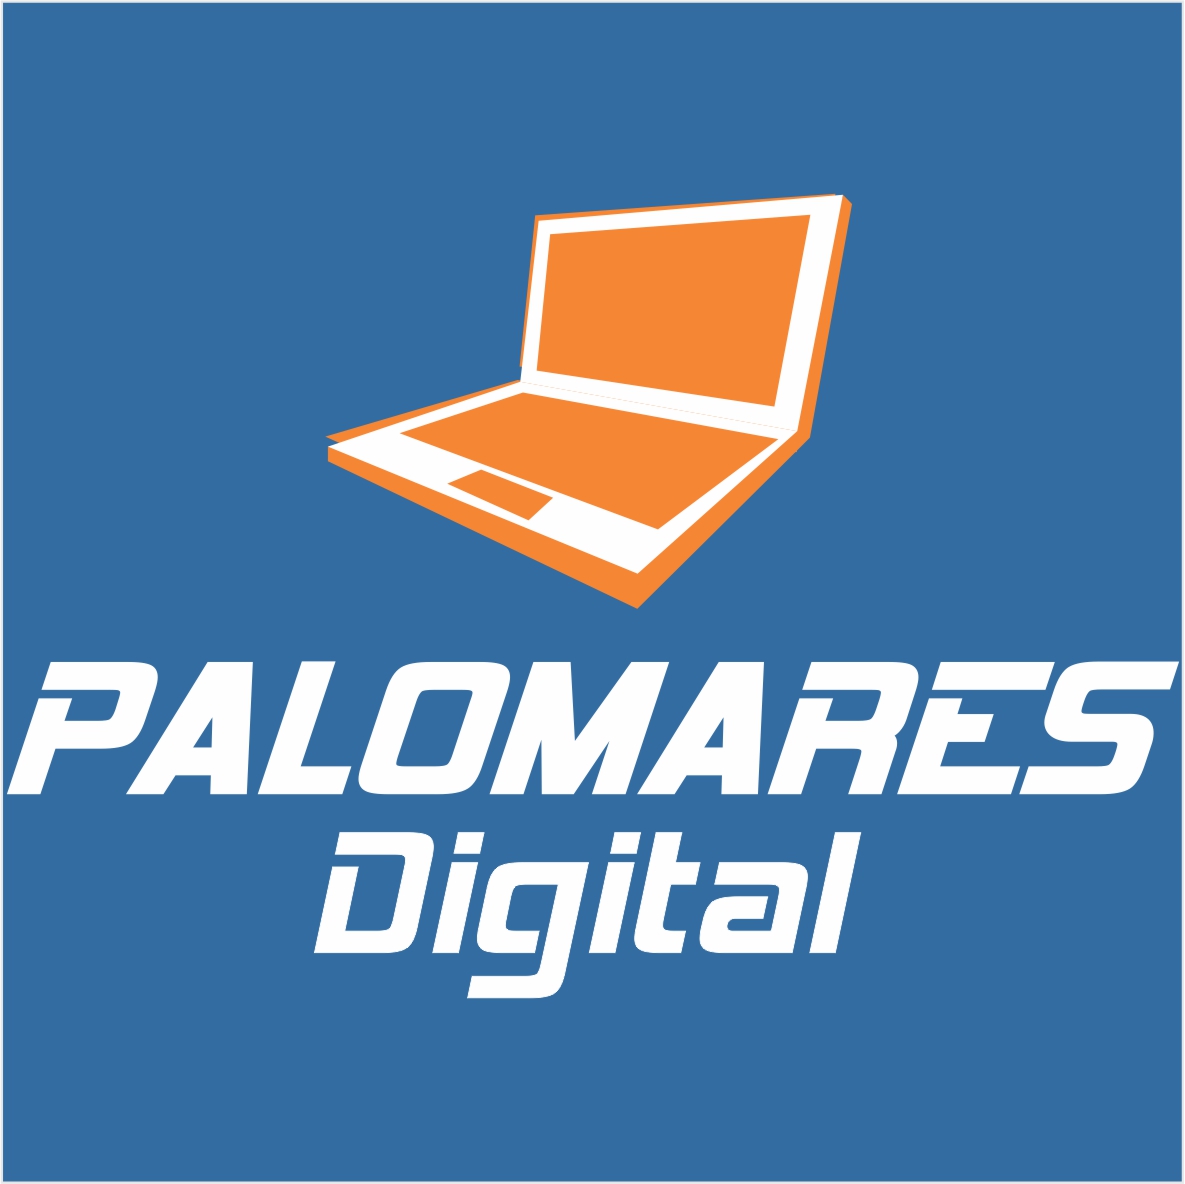 Palomares Digital